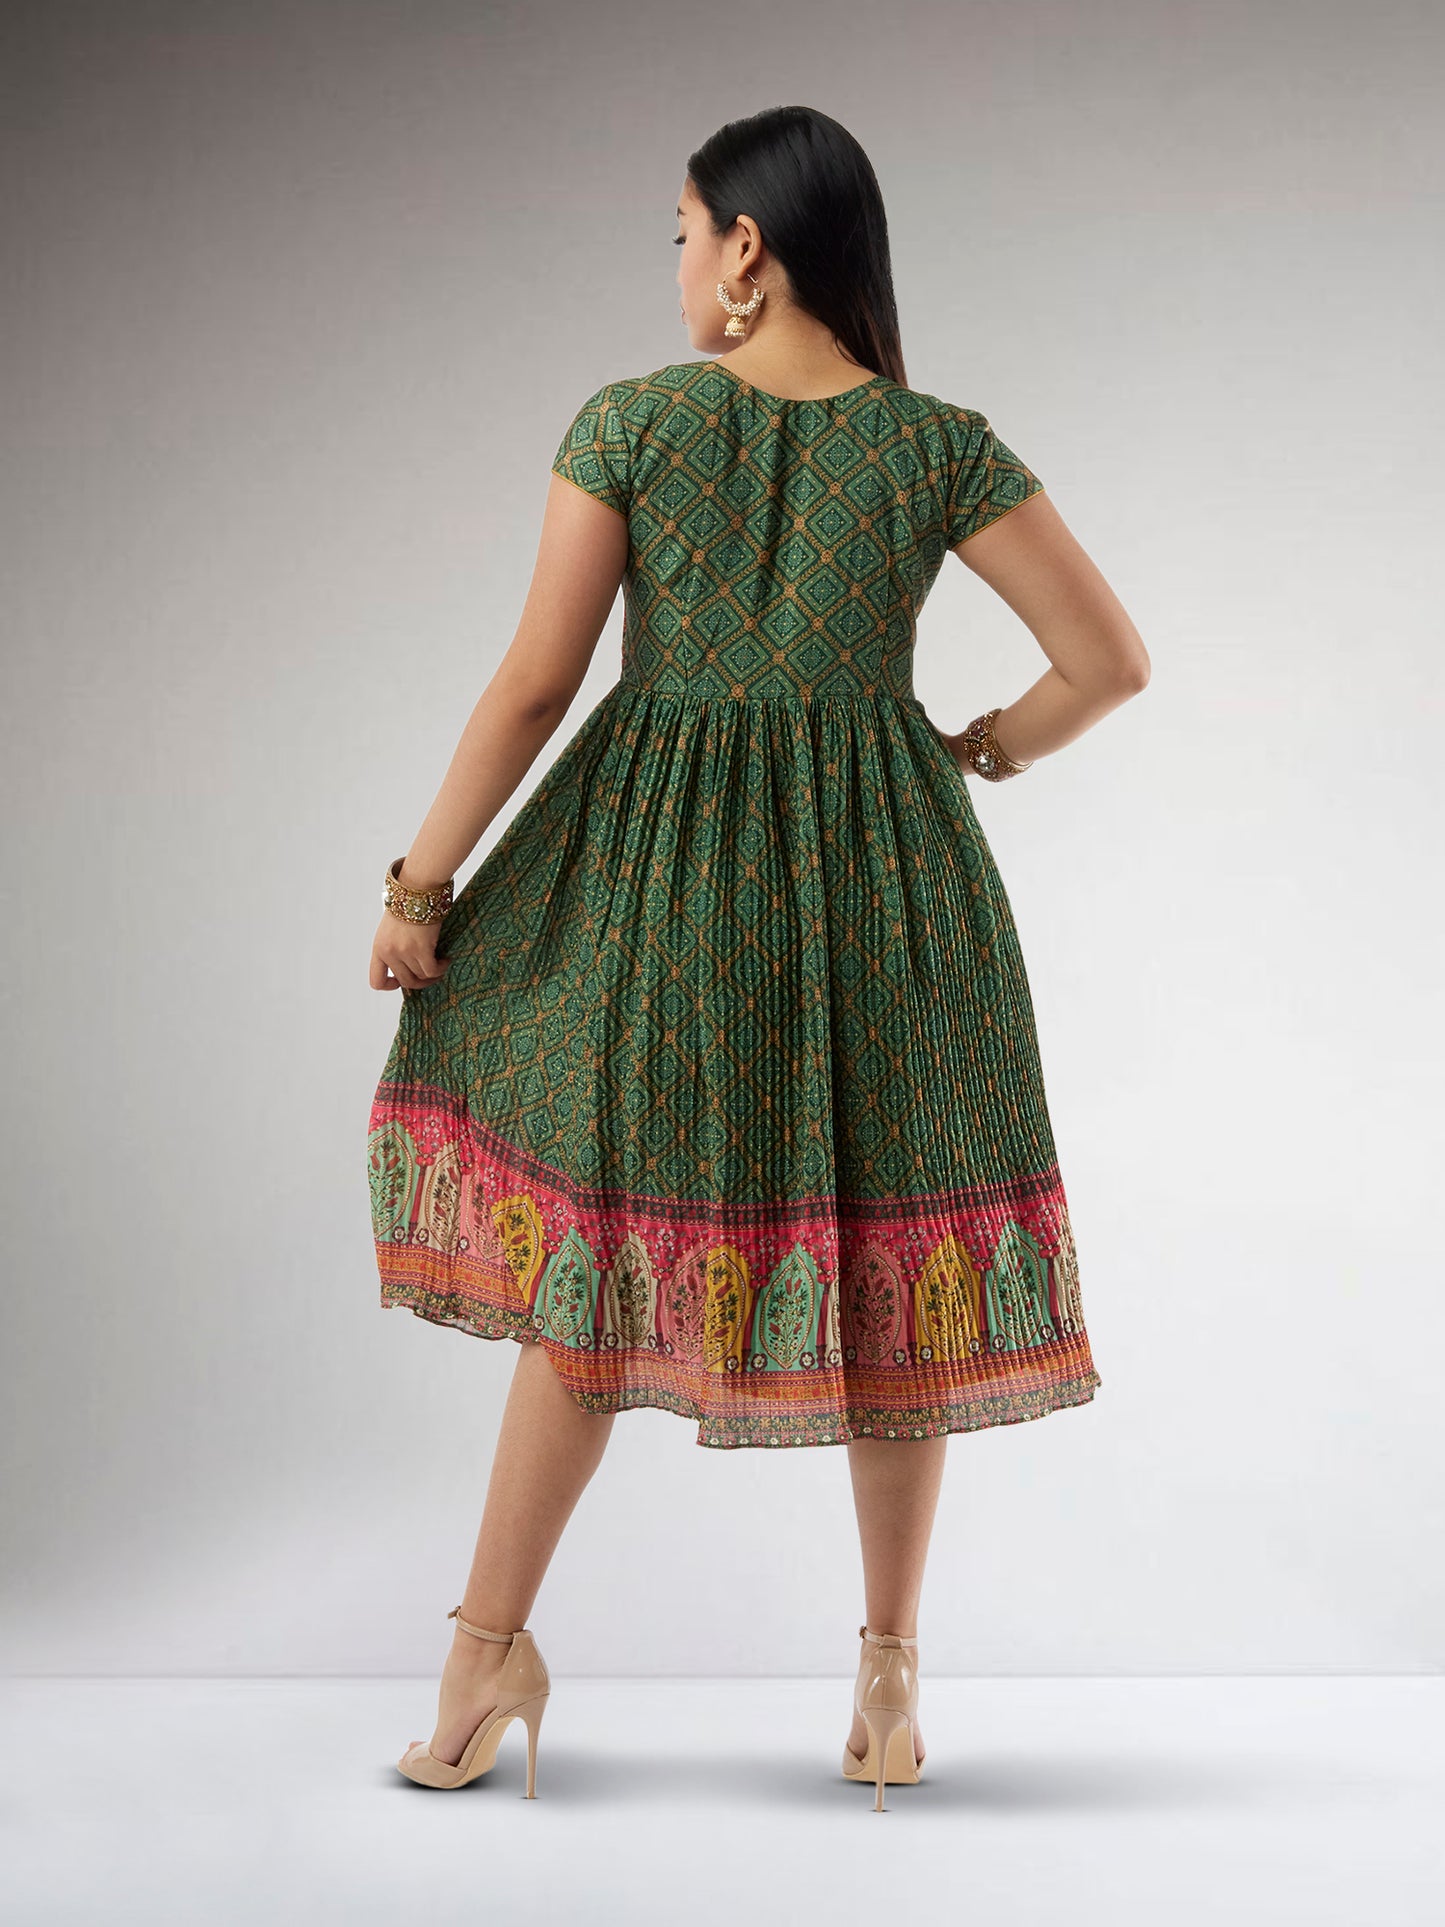 Harmony Hues - Dark Green Crushed Knee Length Dress